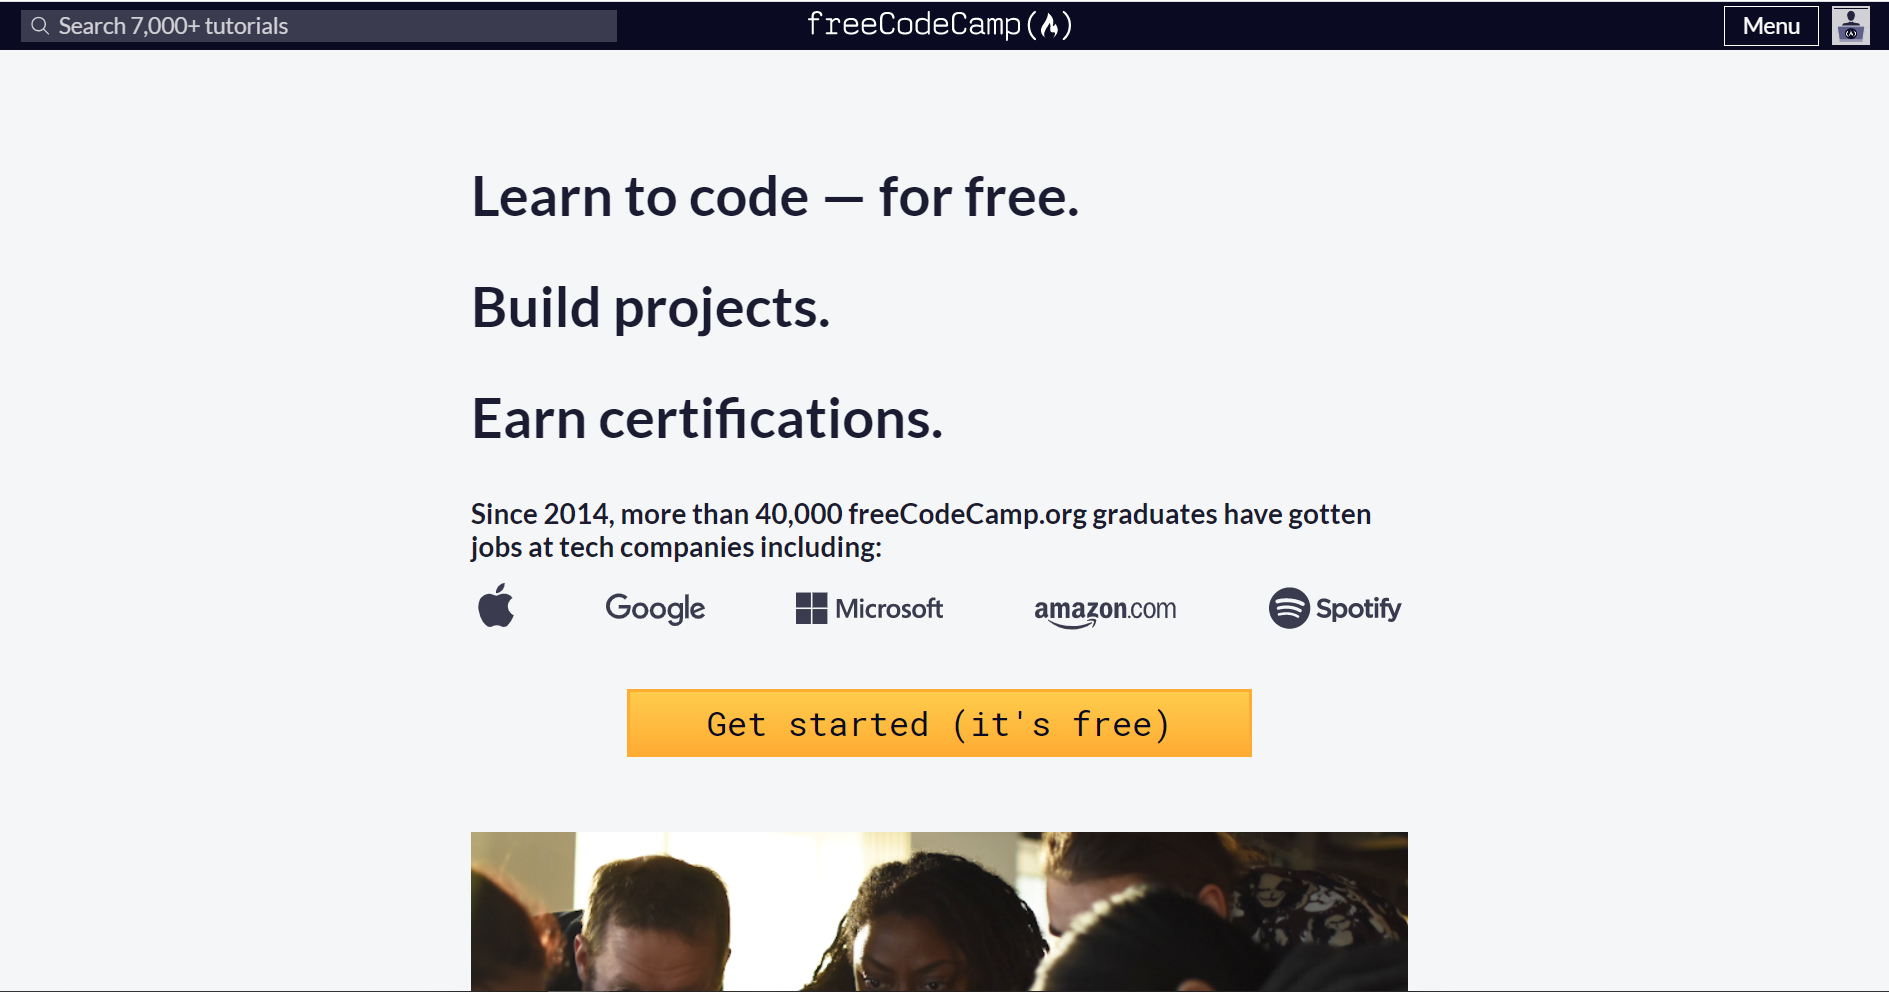 freecodecamp.org